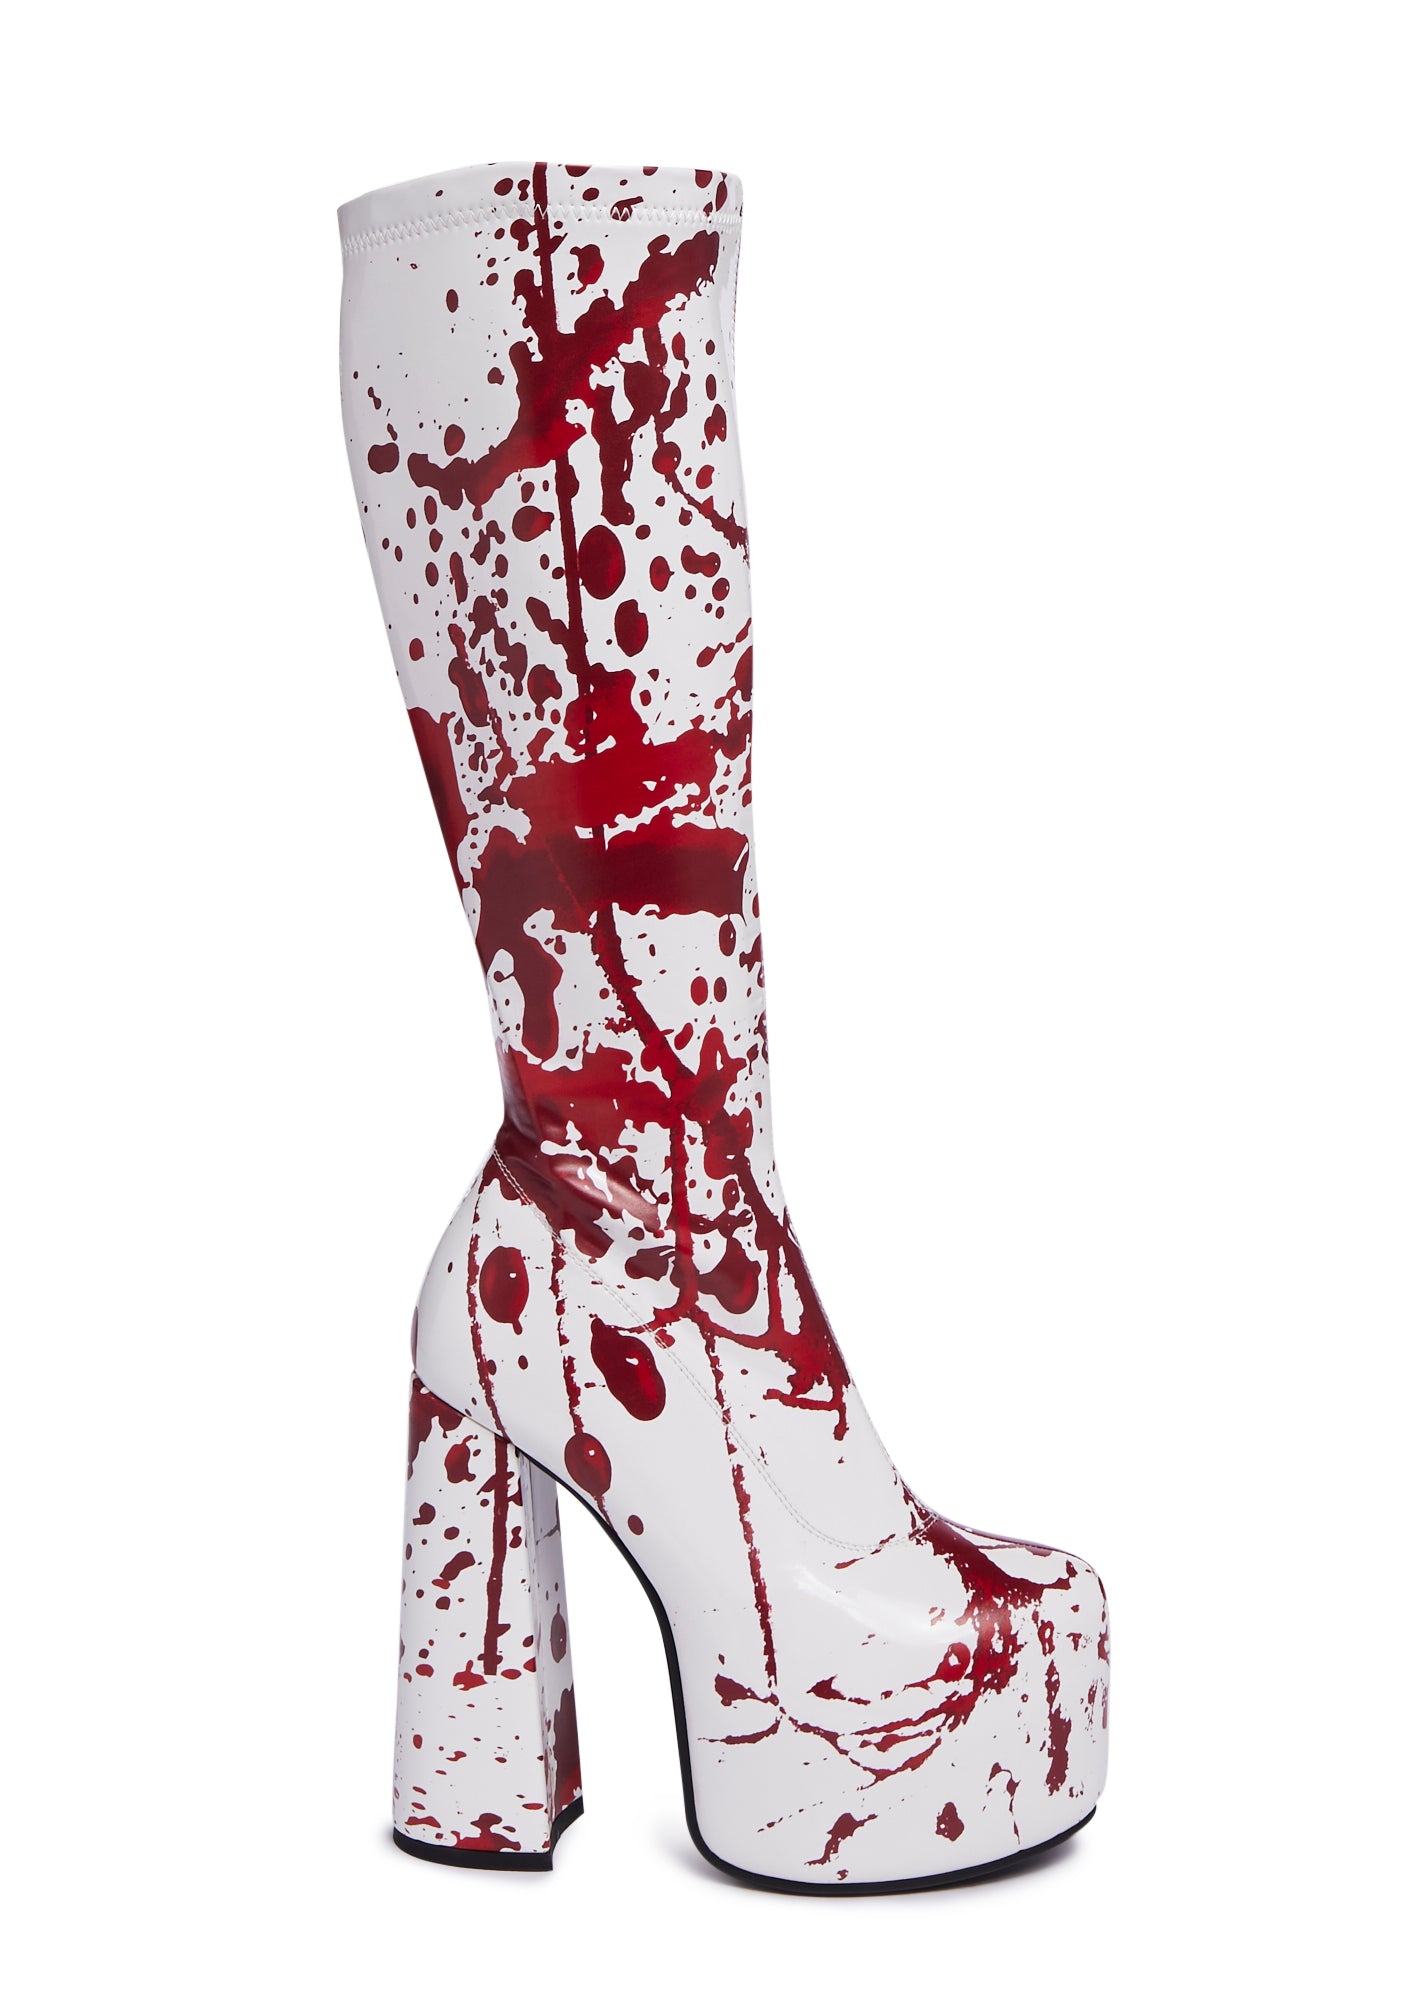 Trickz N' Treatz Blood Print Knee High Gogo Boots - Red/White